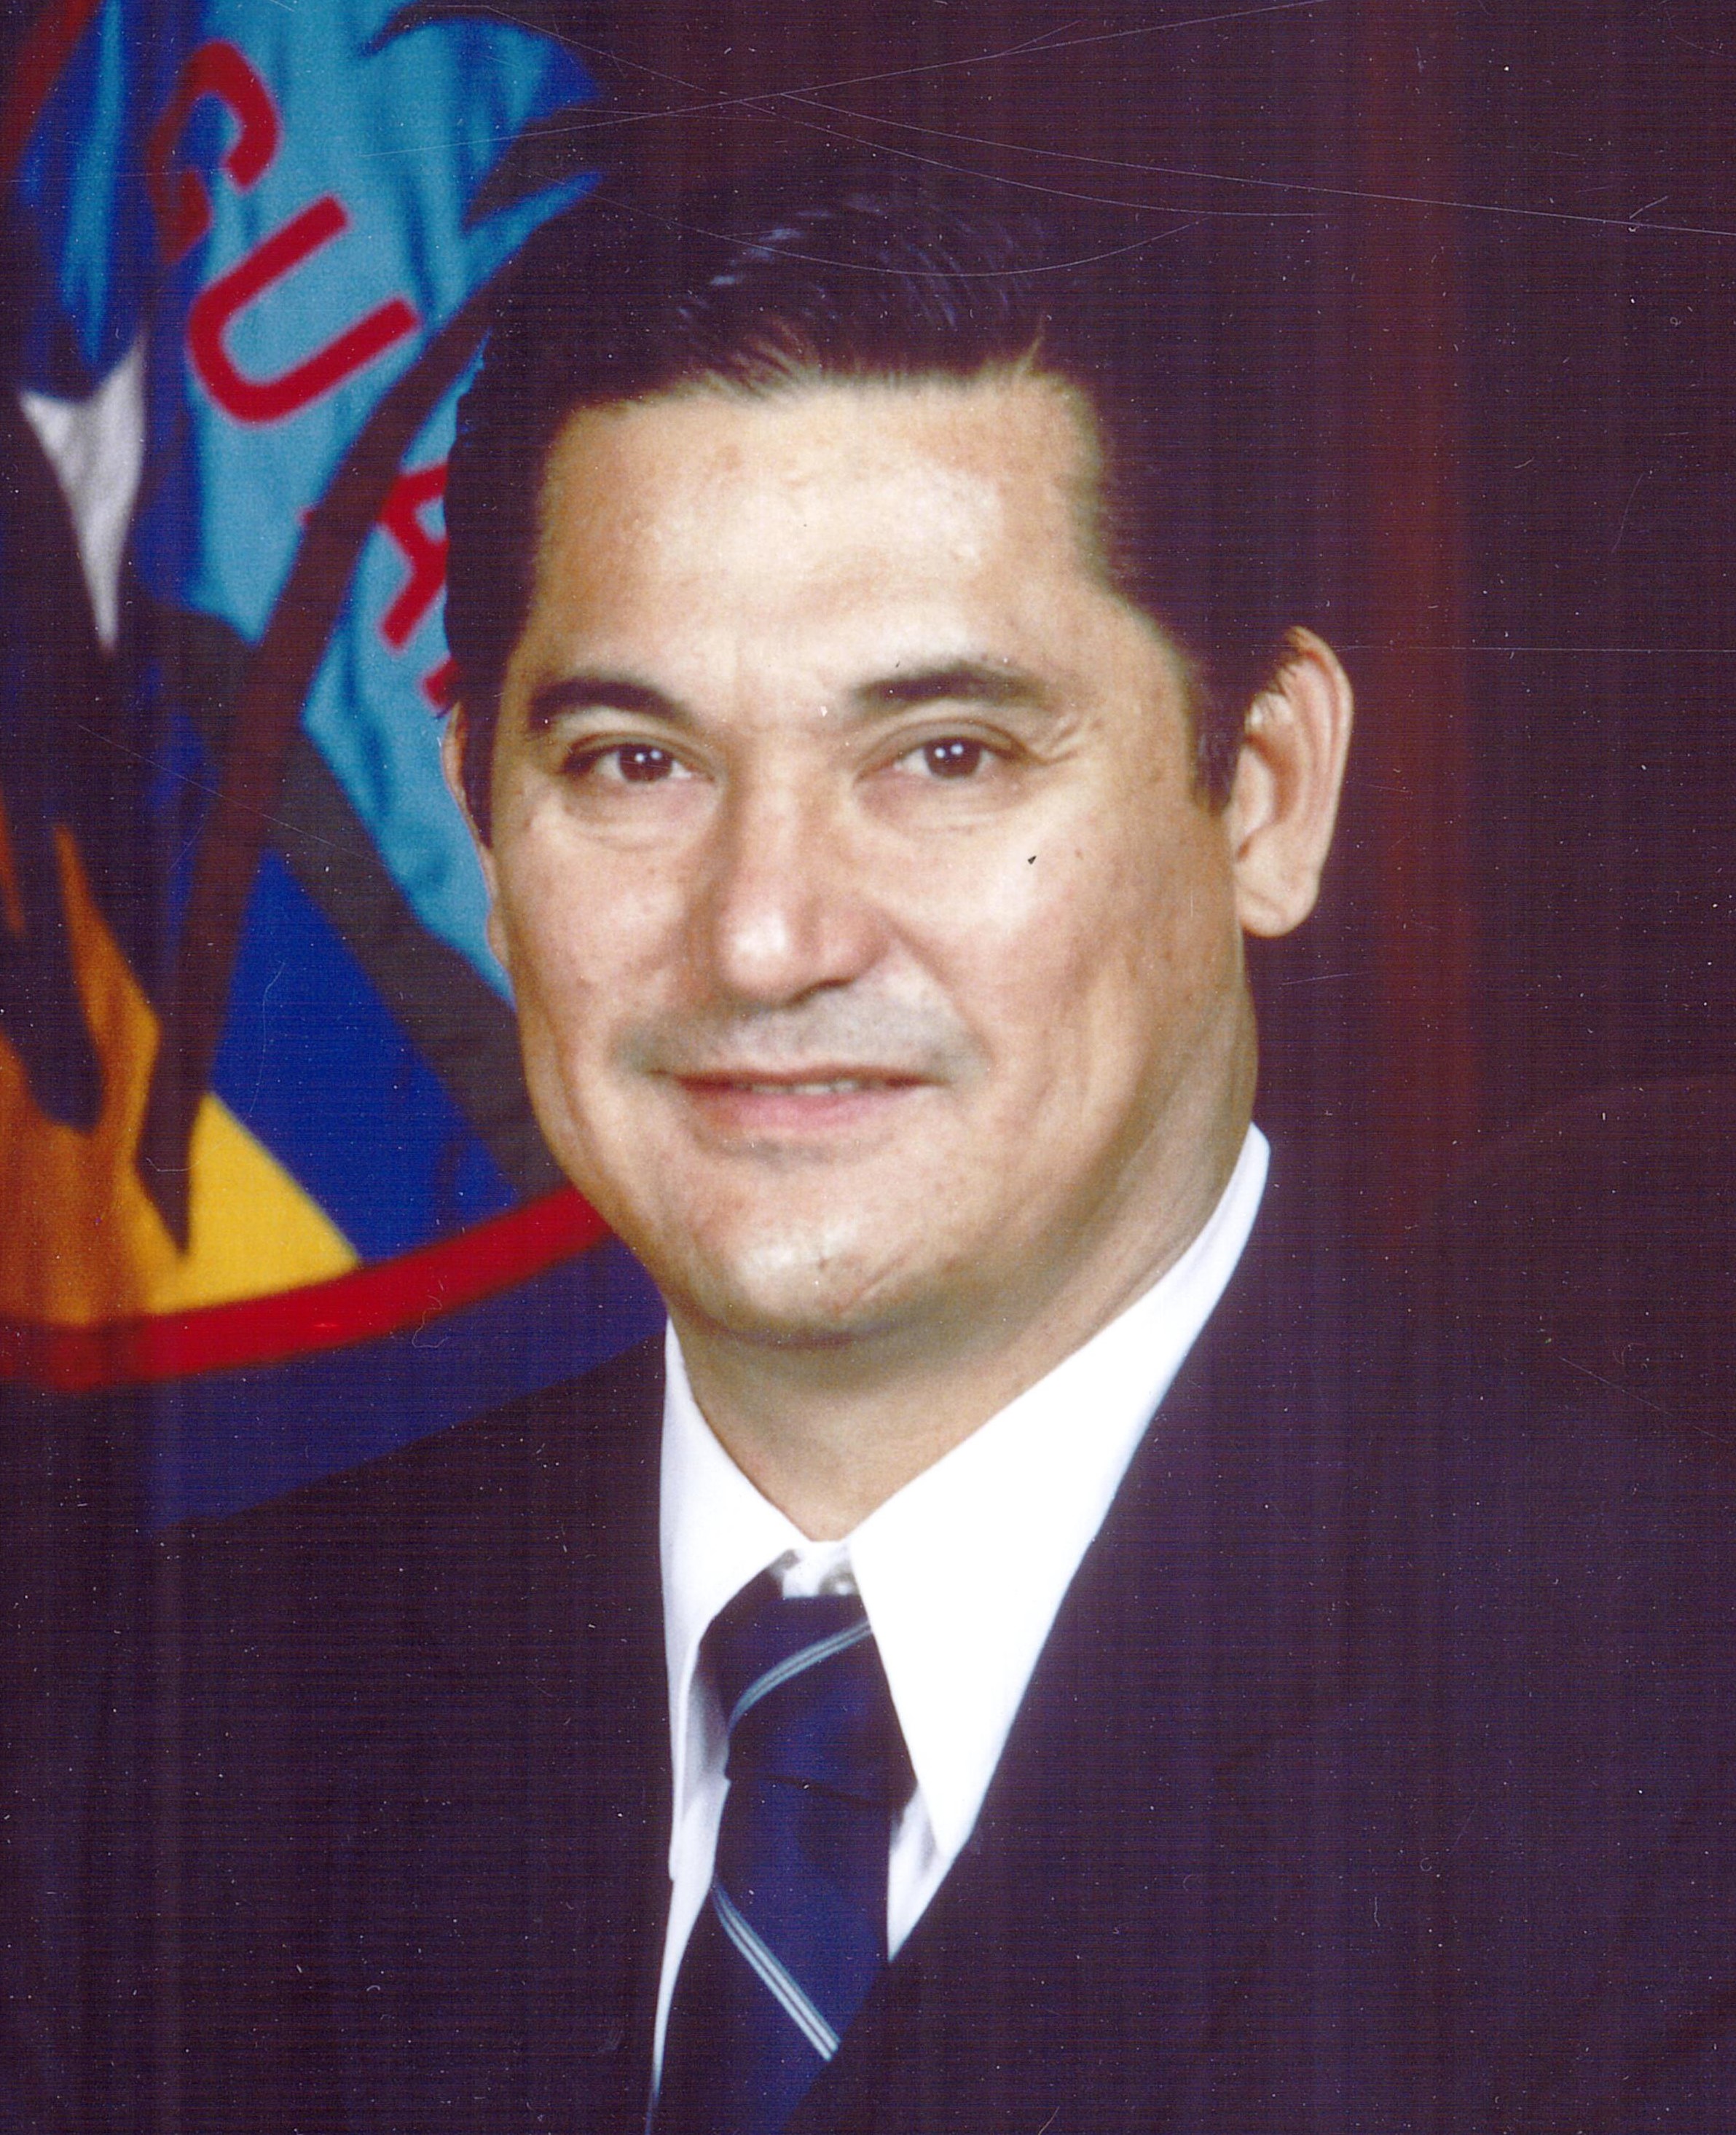 Carl T. C. Gutierrez